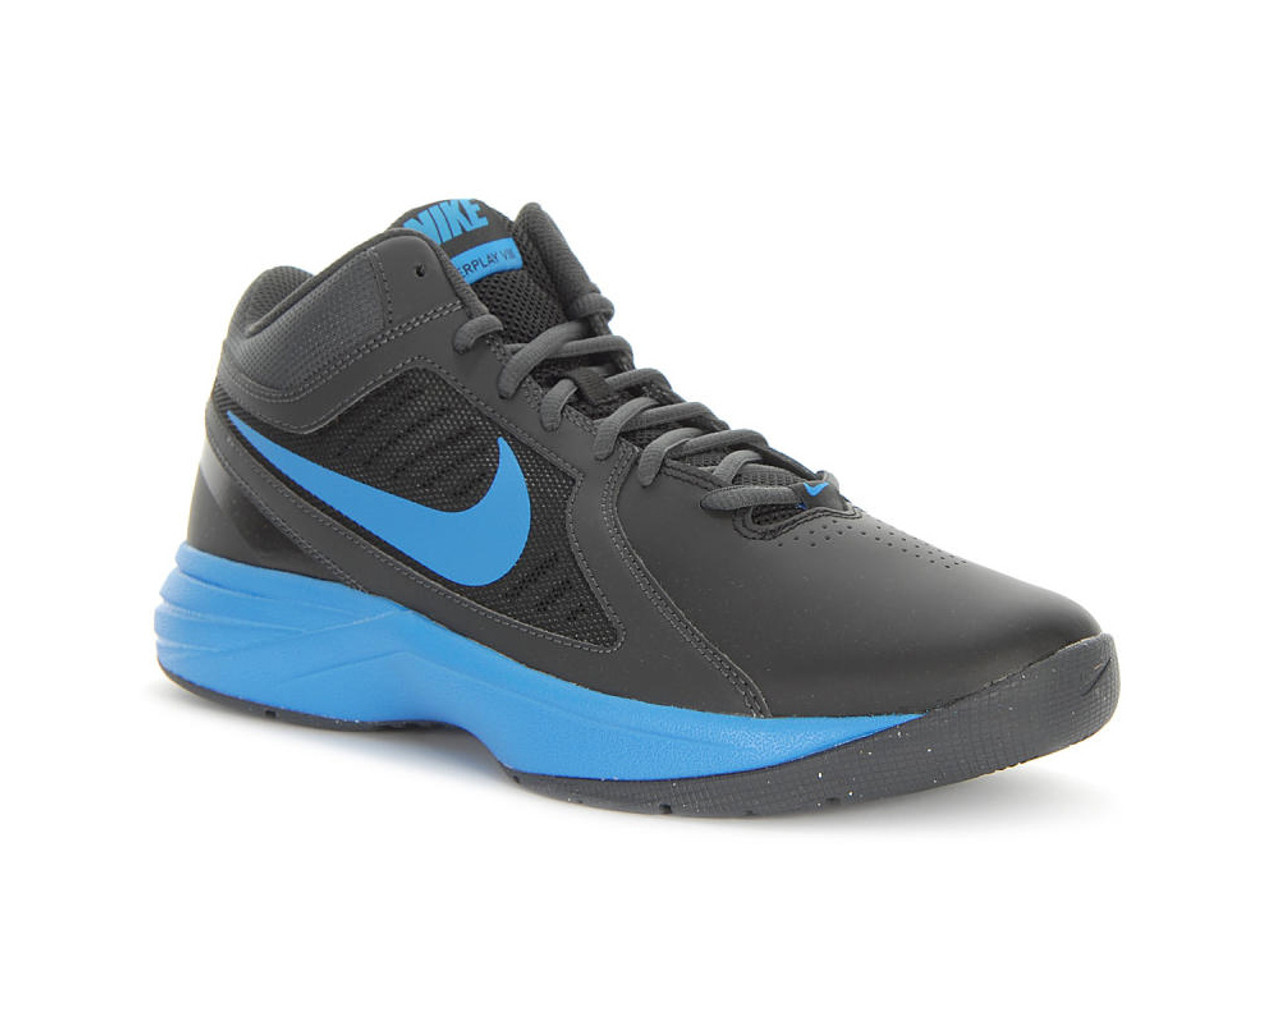 Nike Men's The Overplay VIII Basketball Shoes - Black | Discount Nike Men's  Athletic & More - Shoolu.com | Shoolu.com